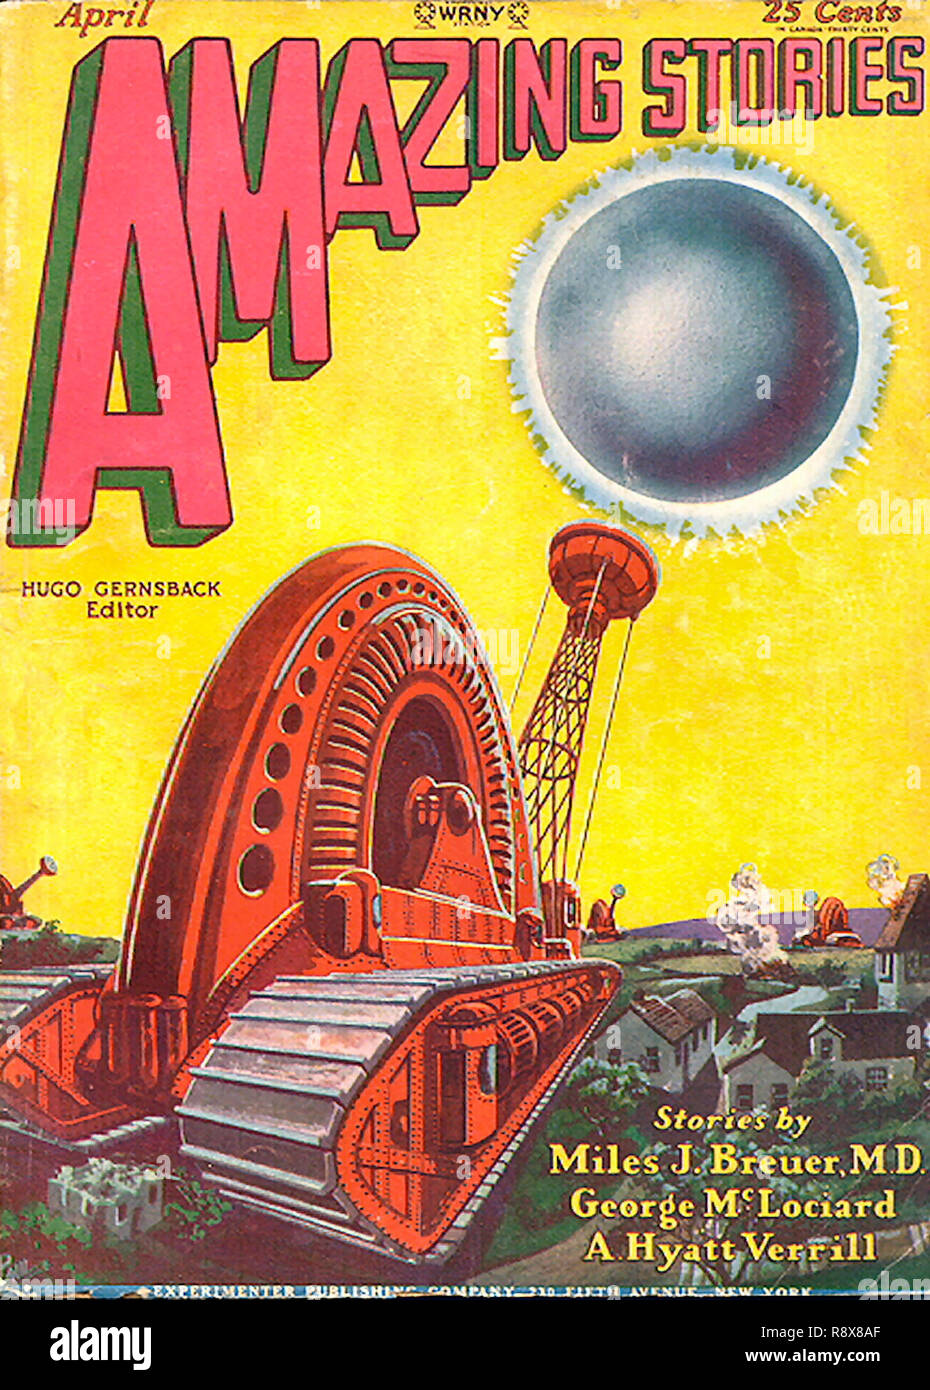 Amazing Stories Vol 4 # 1 April 1929 Stock Photo